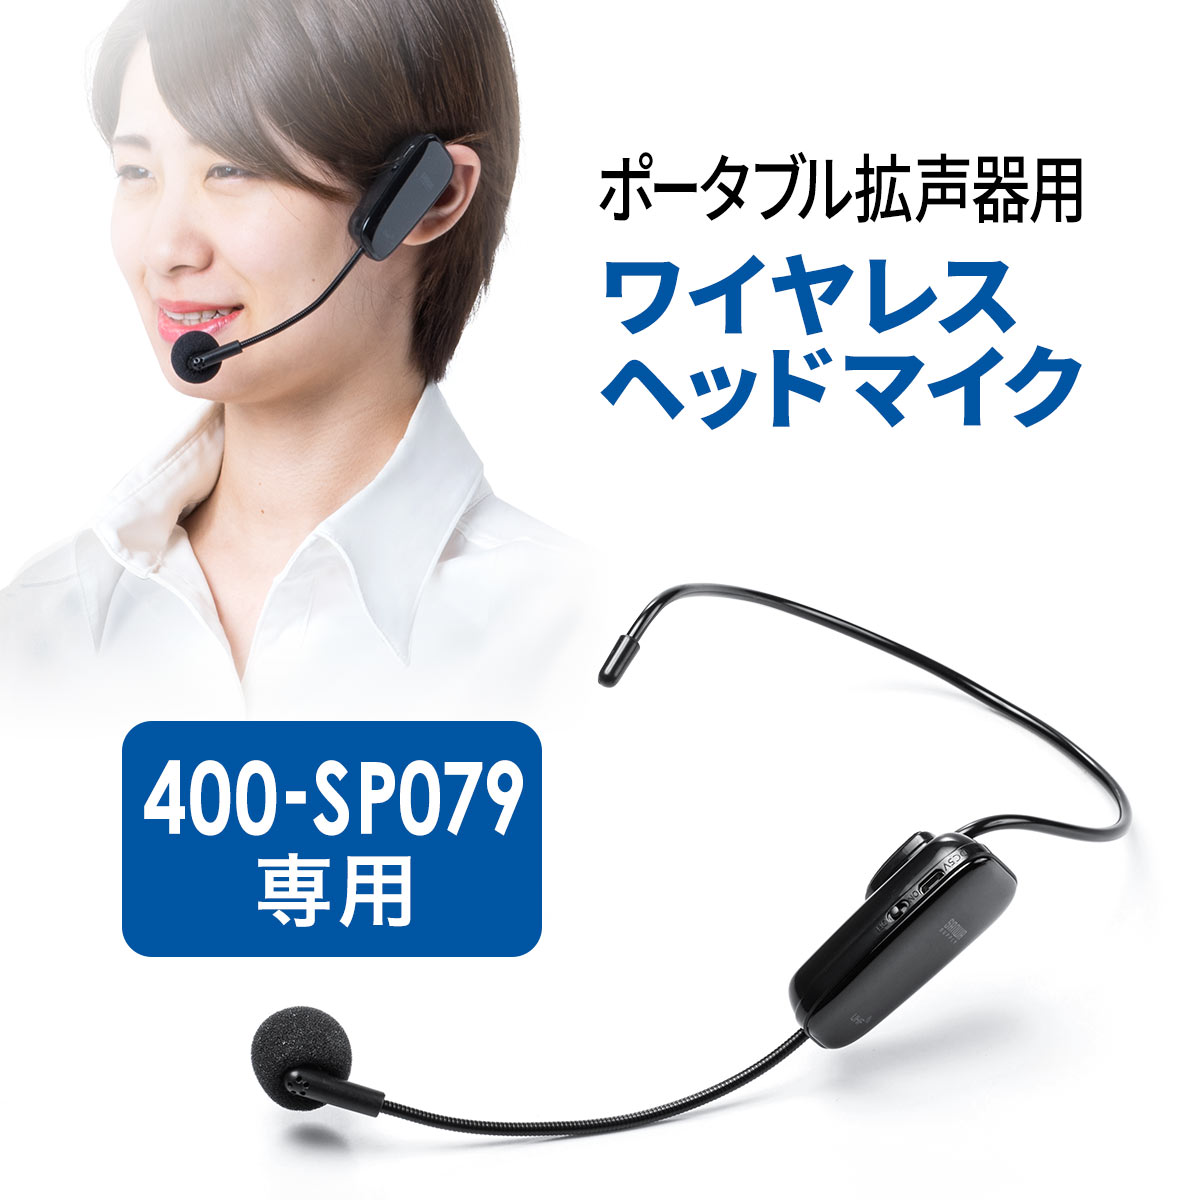 400-SP079 専用ワイヤレスマイク USB充電式 400-SP079HM1